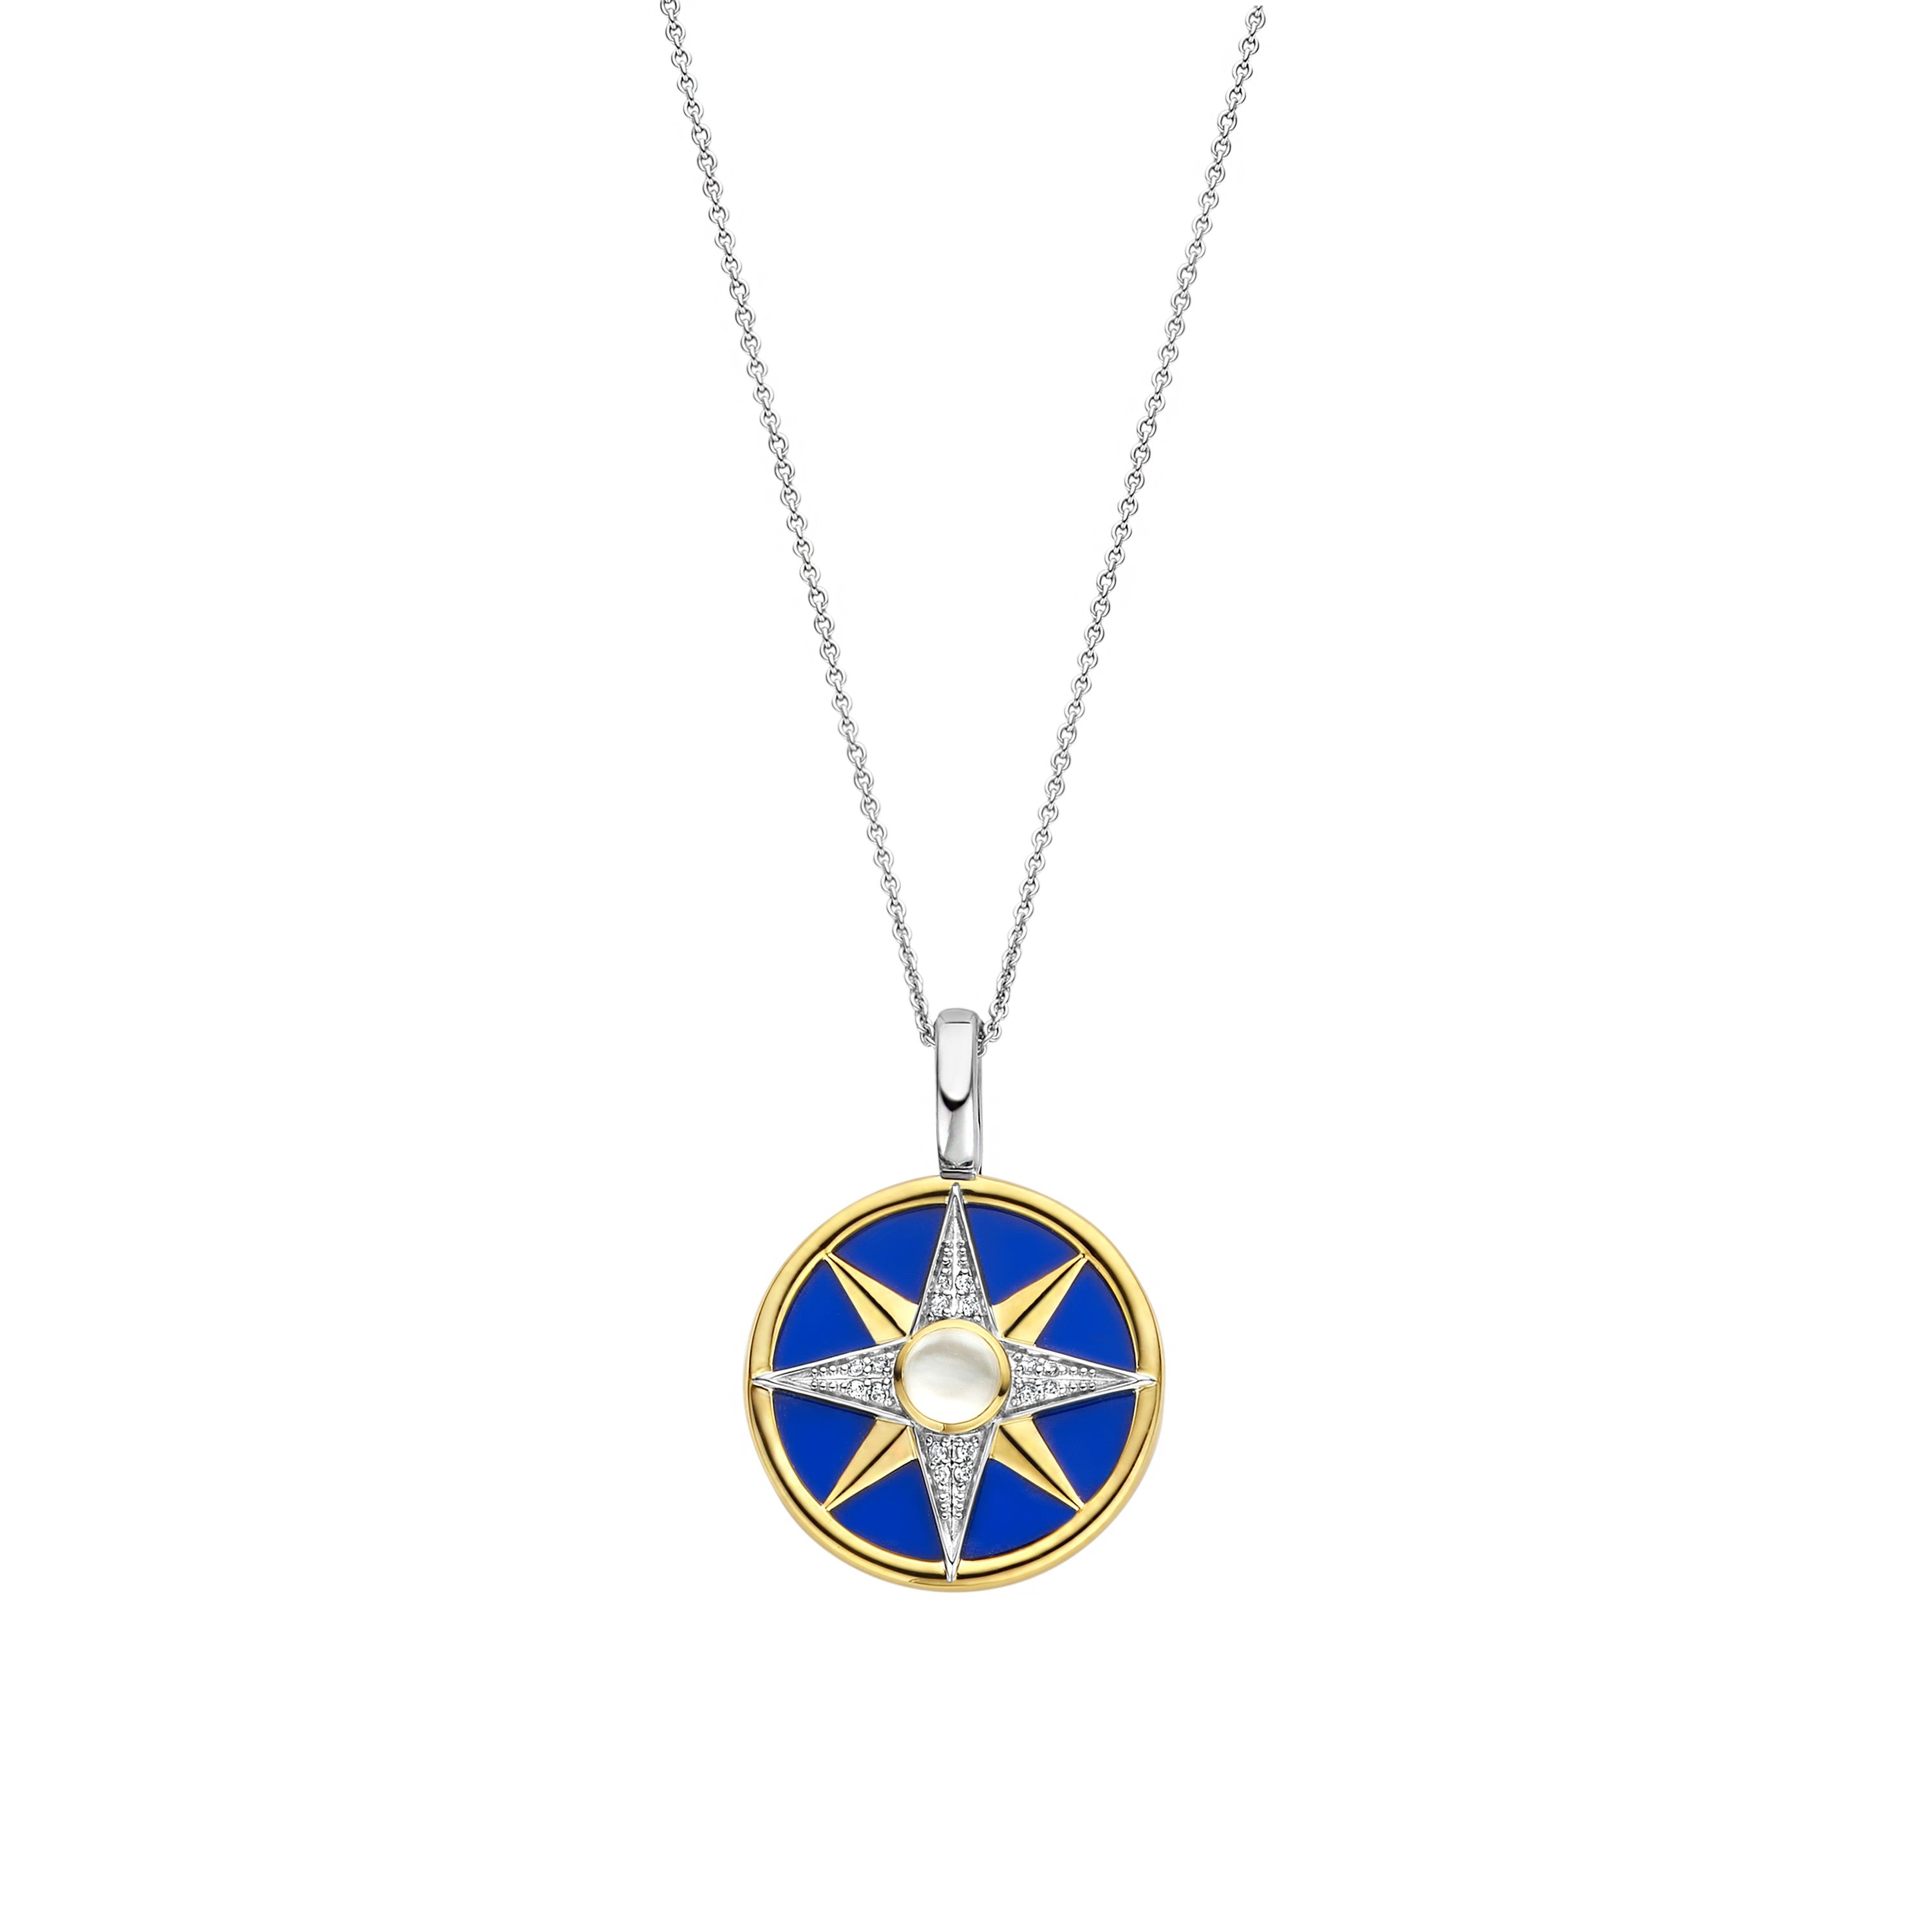 Spiritual Compass Necklace